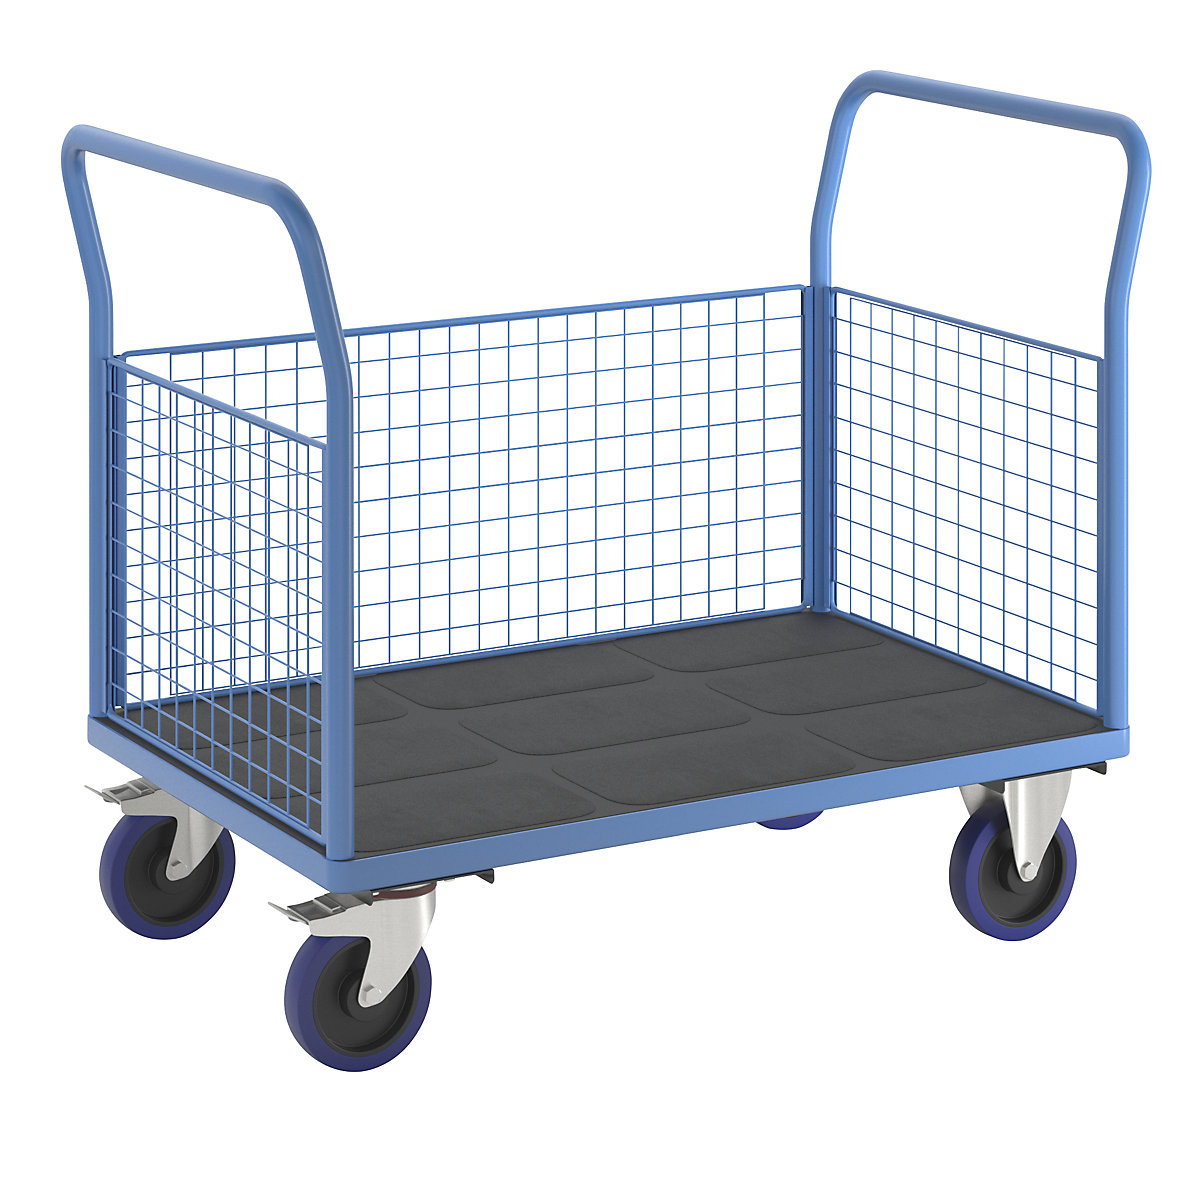 Plošinový vozík s mřížkovými stěnami – eurokraft pro